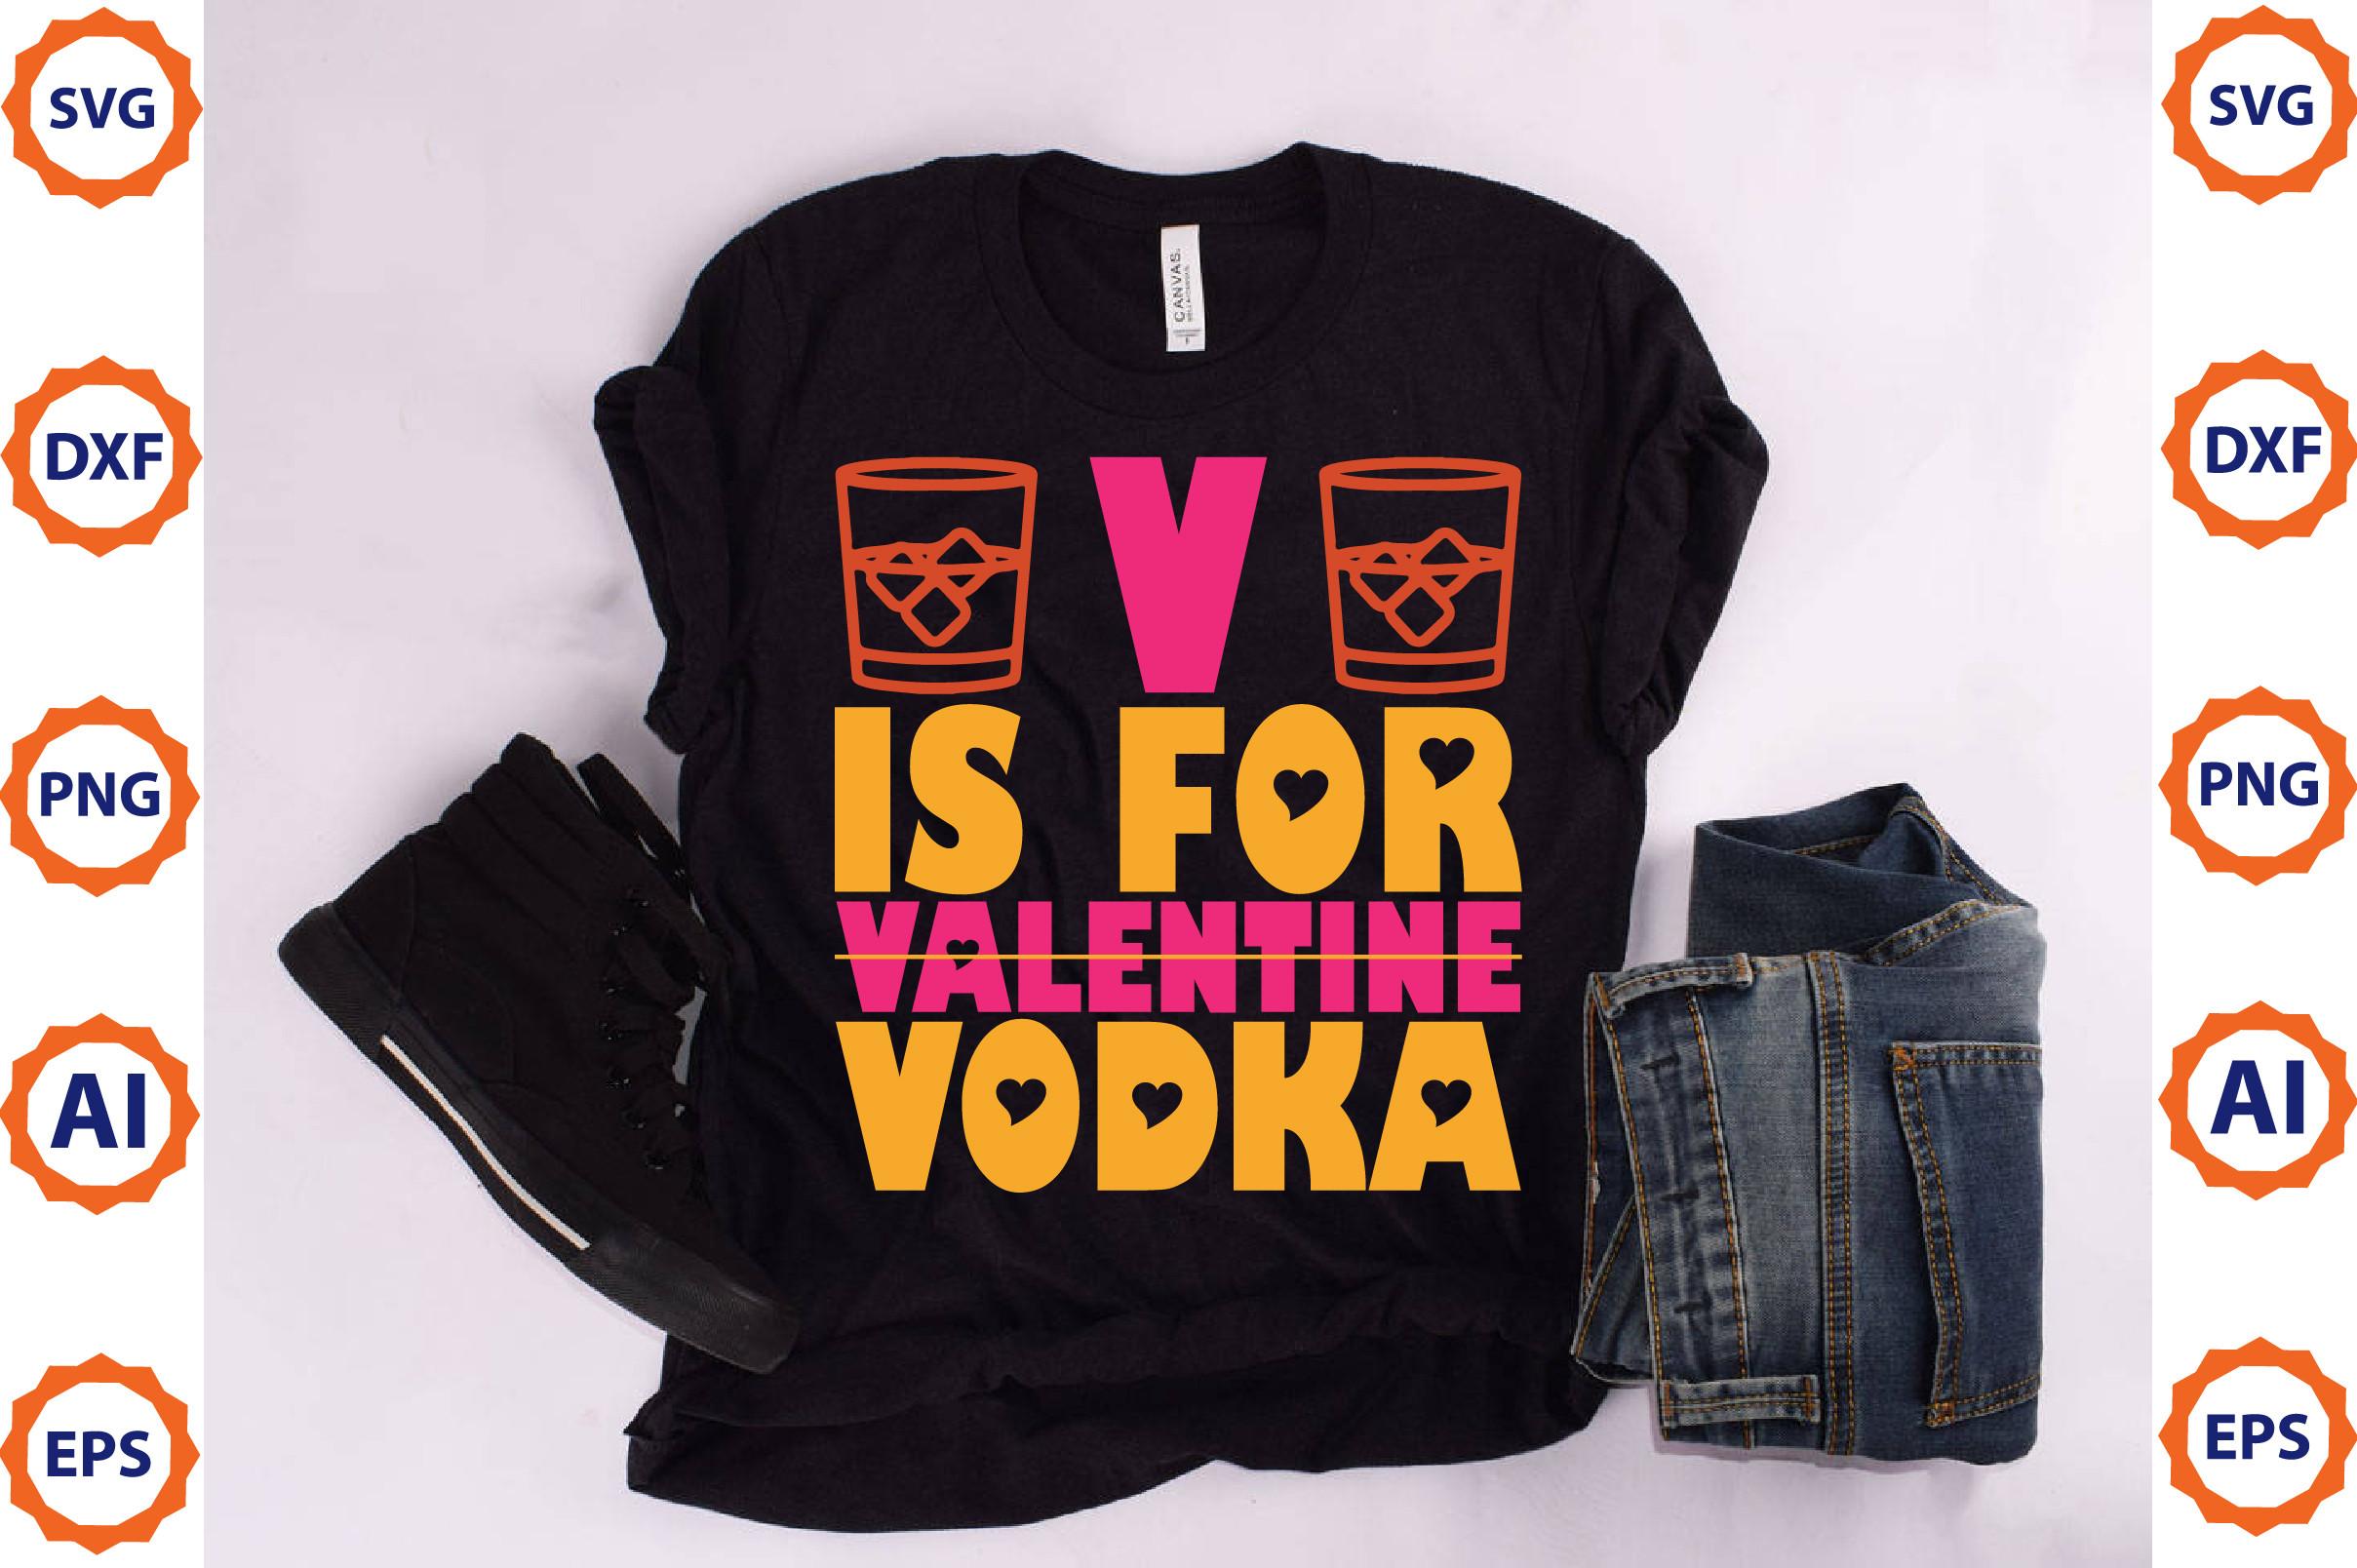 V is for Valentine Vodka7